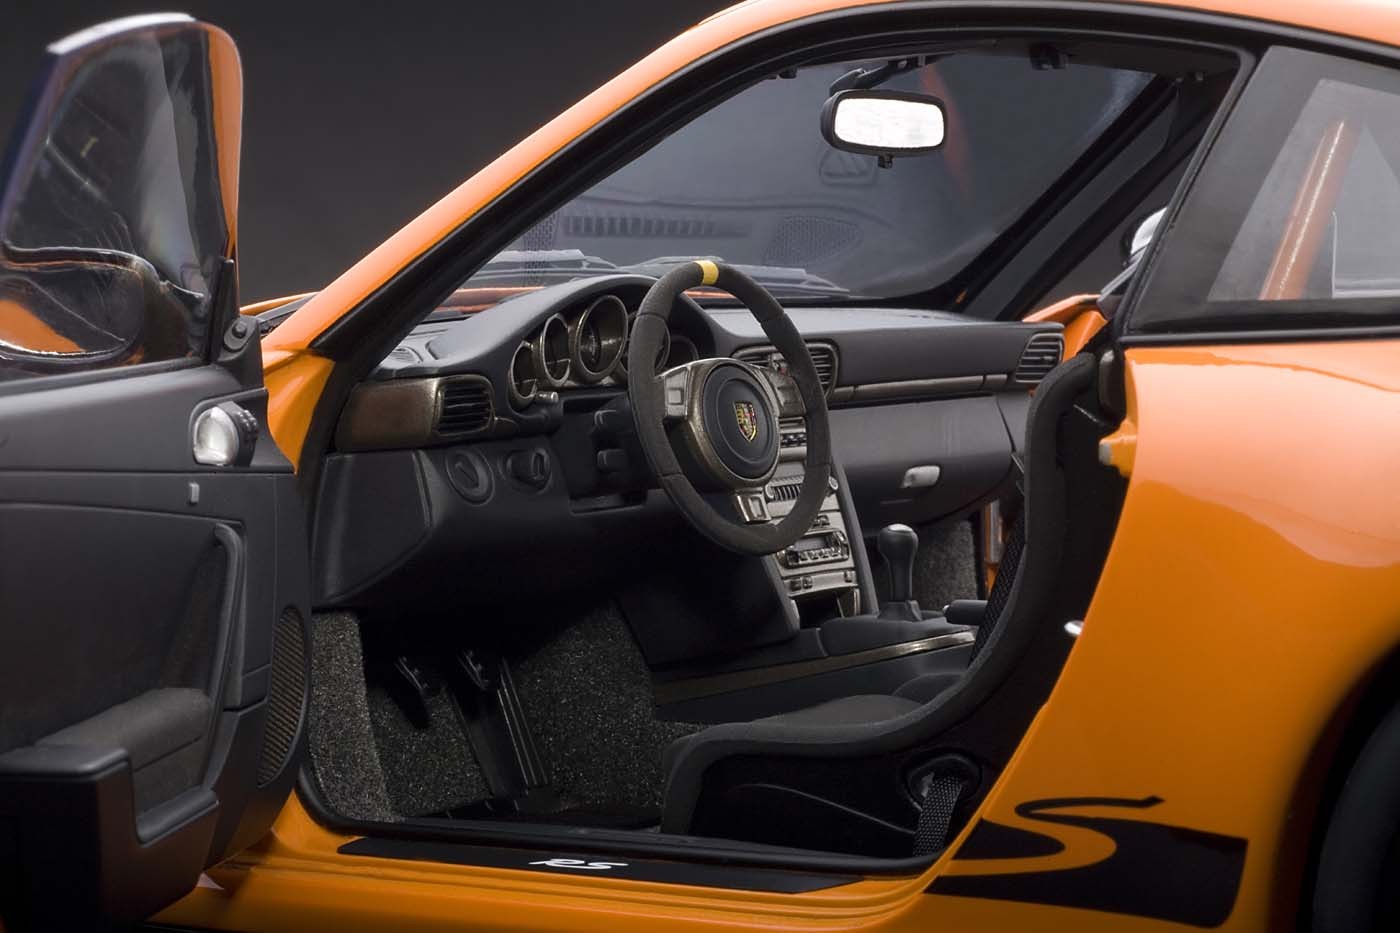 Sale! Porsche 997 GT3 RS (911/Carrera) Orange, Black Stripes 12117 1:12